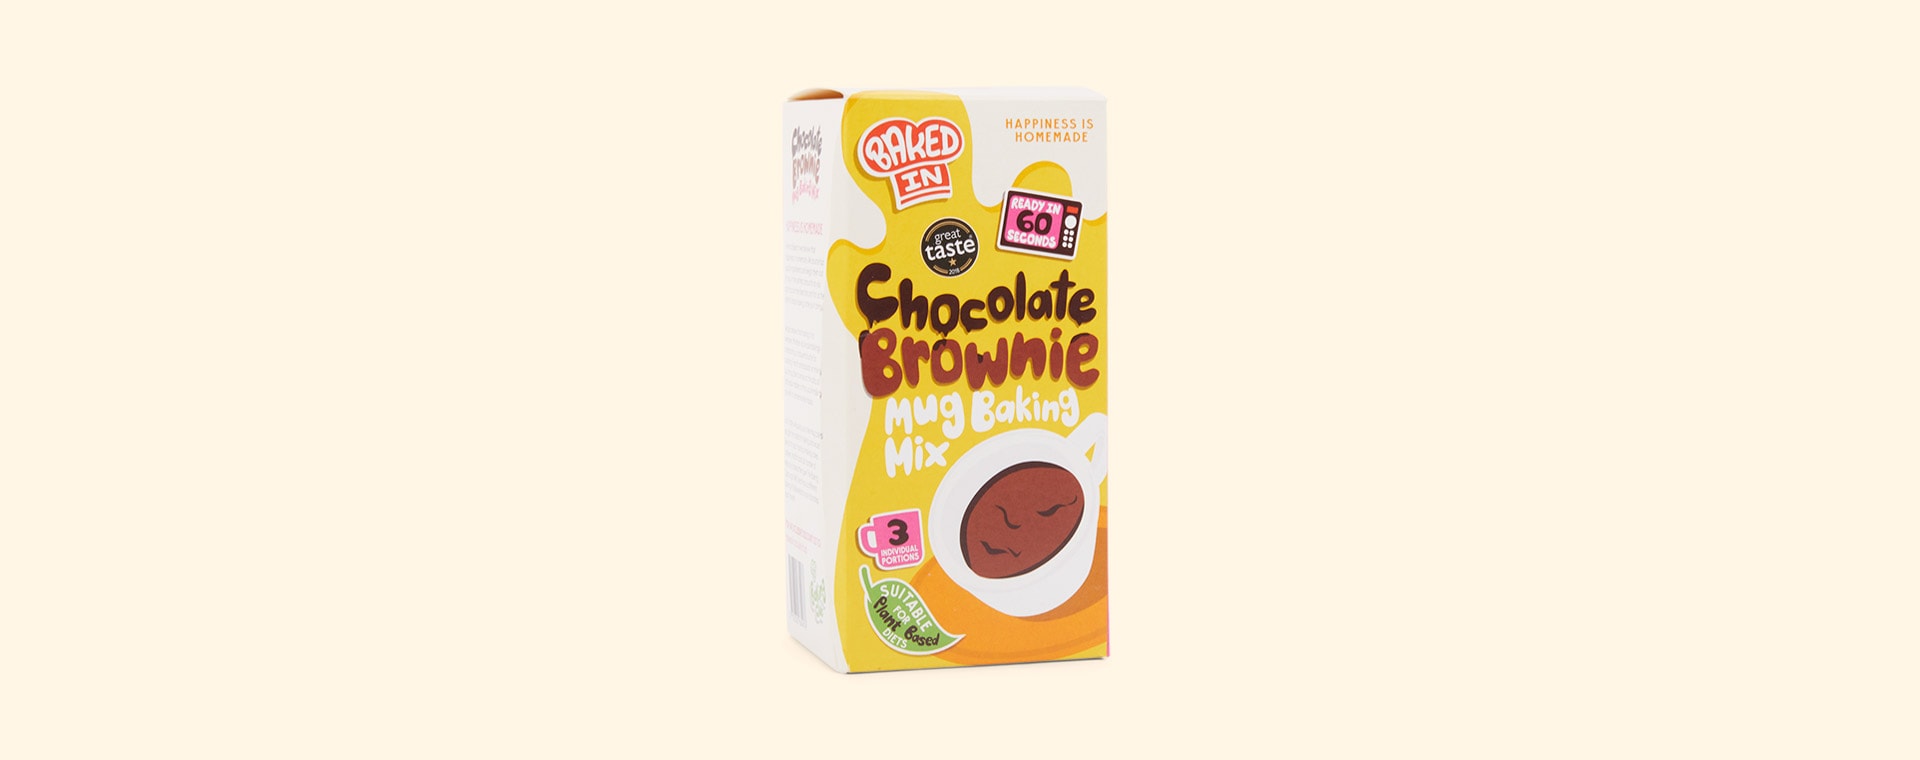 Multi Baked In Chocolate Brownie Mug Baking Kit